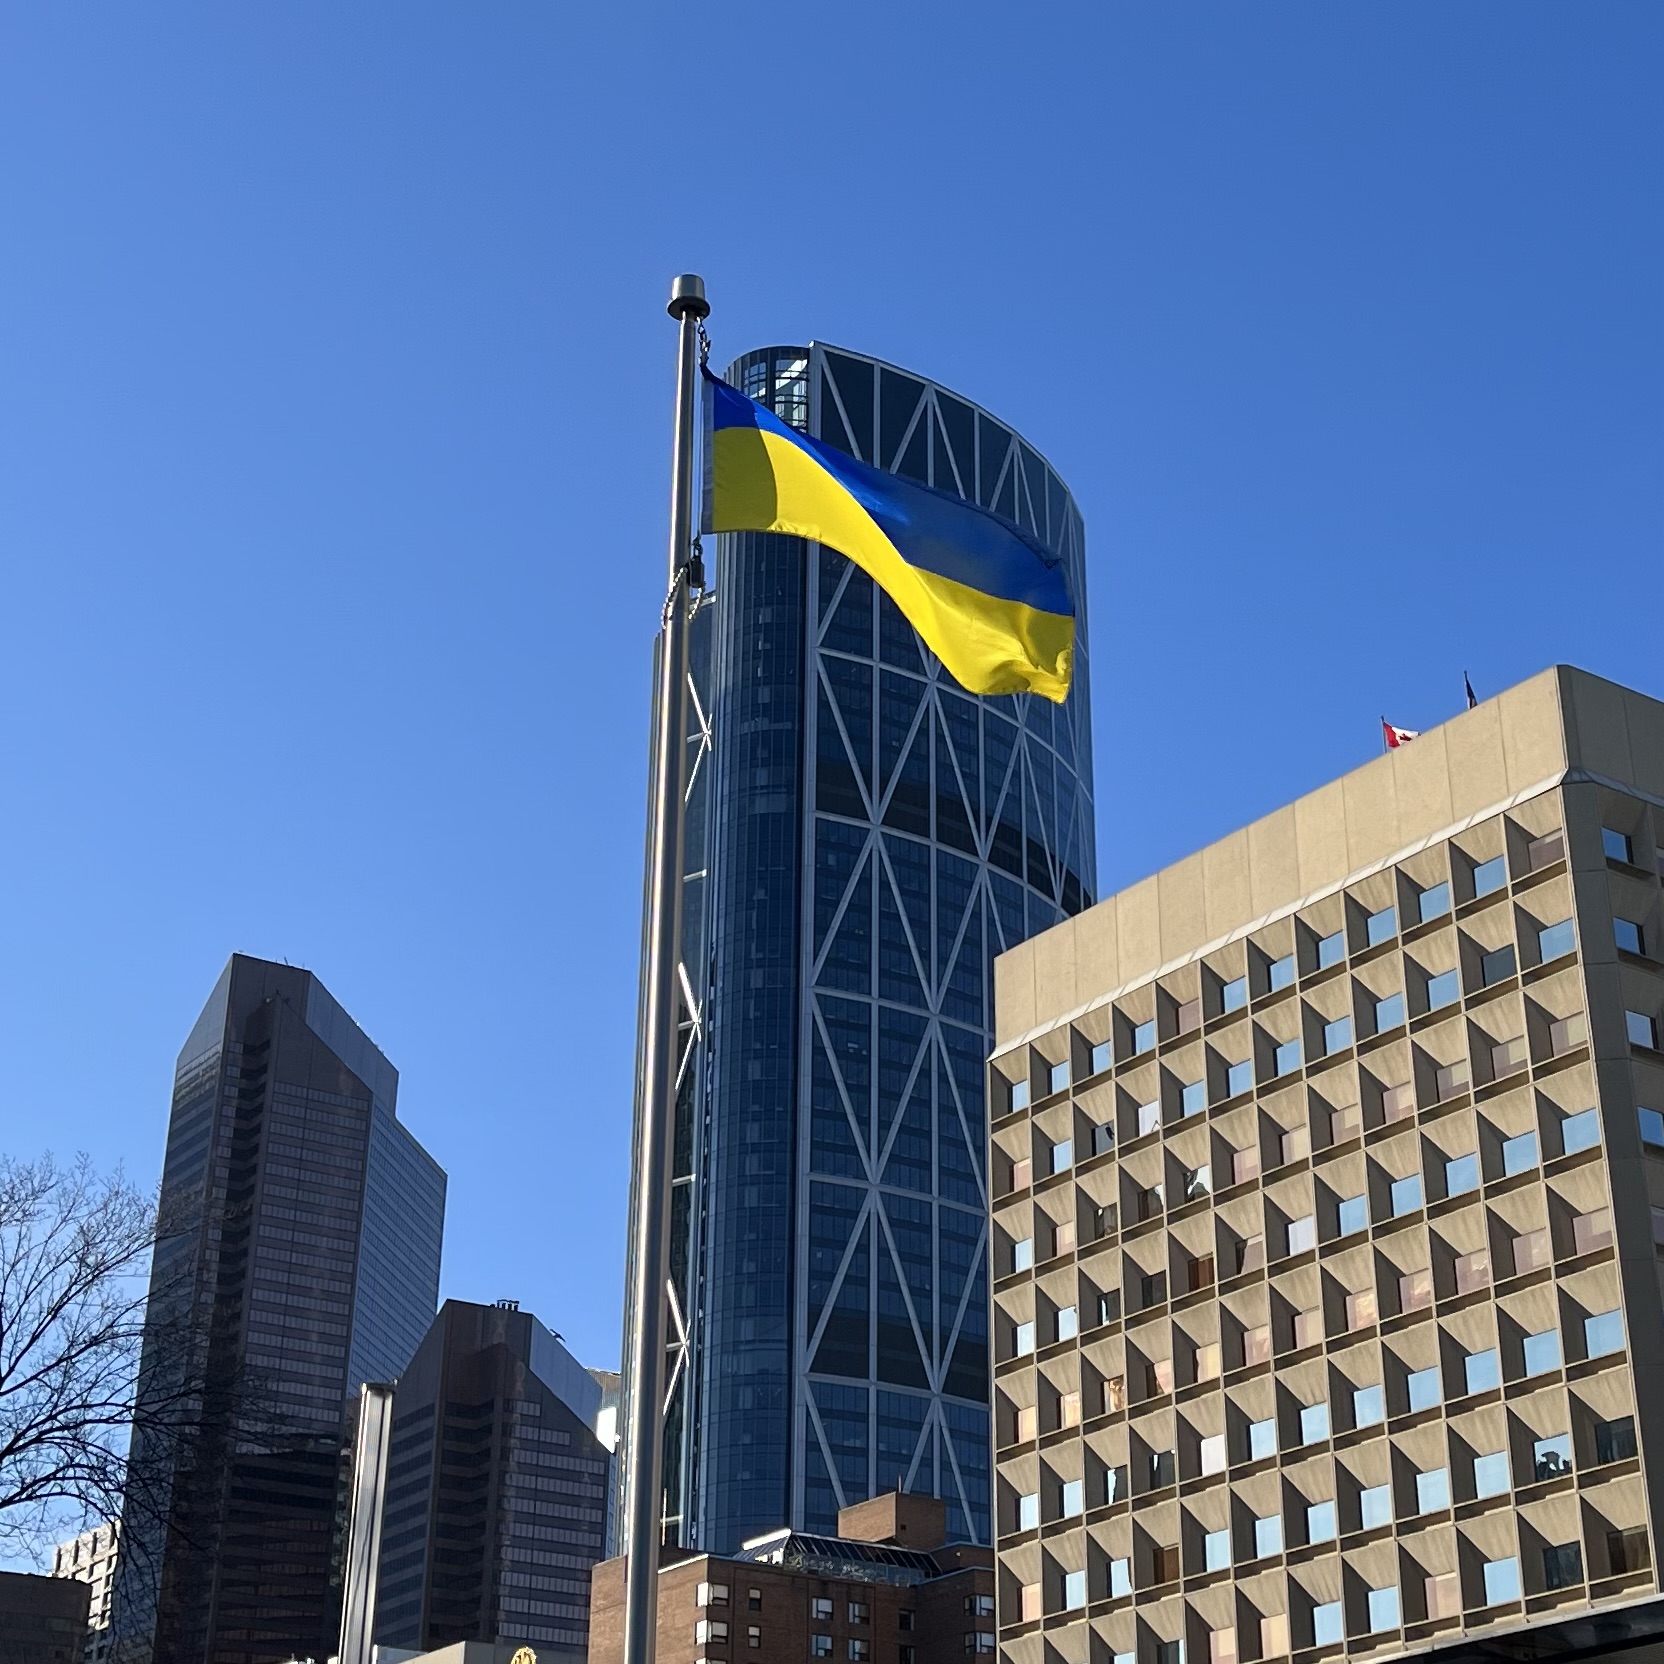 Ukranian flag flying at the Municipal Plaza